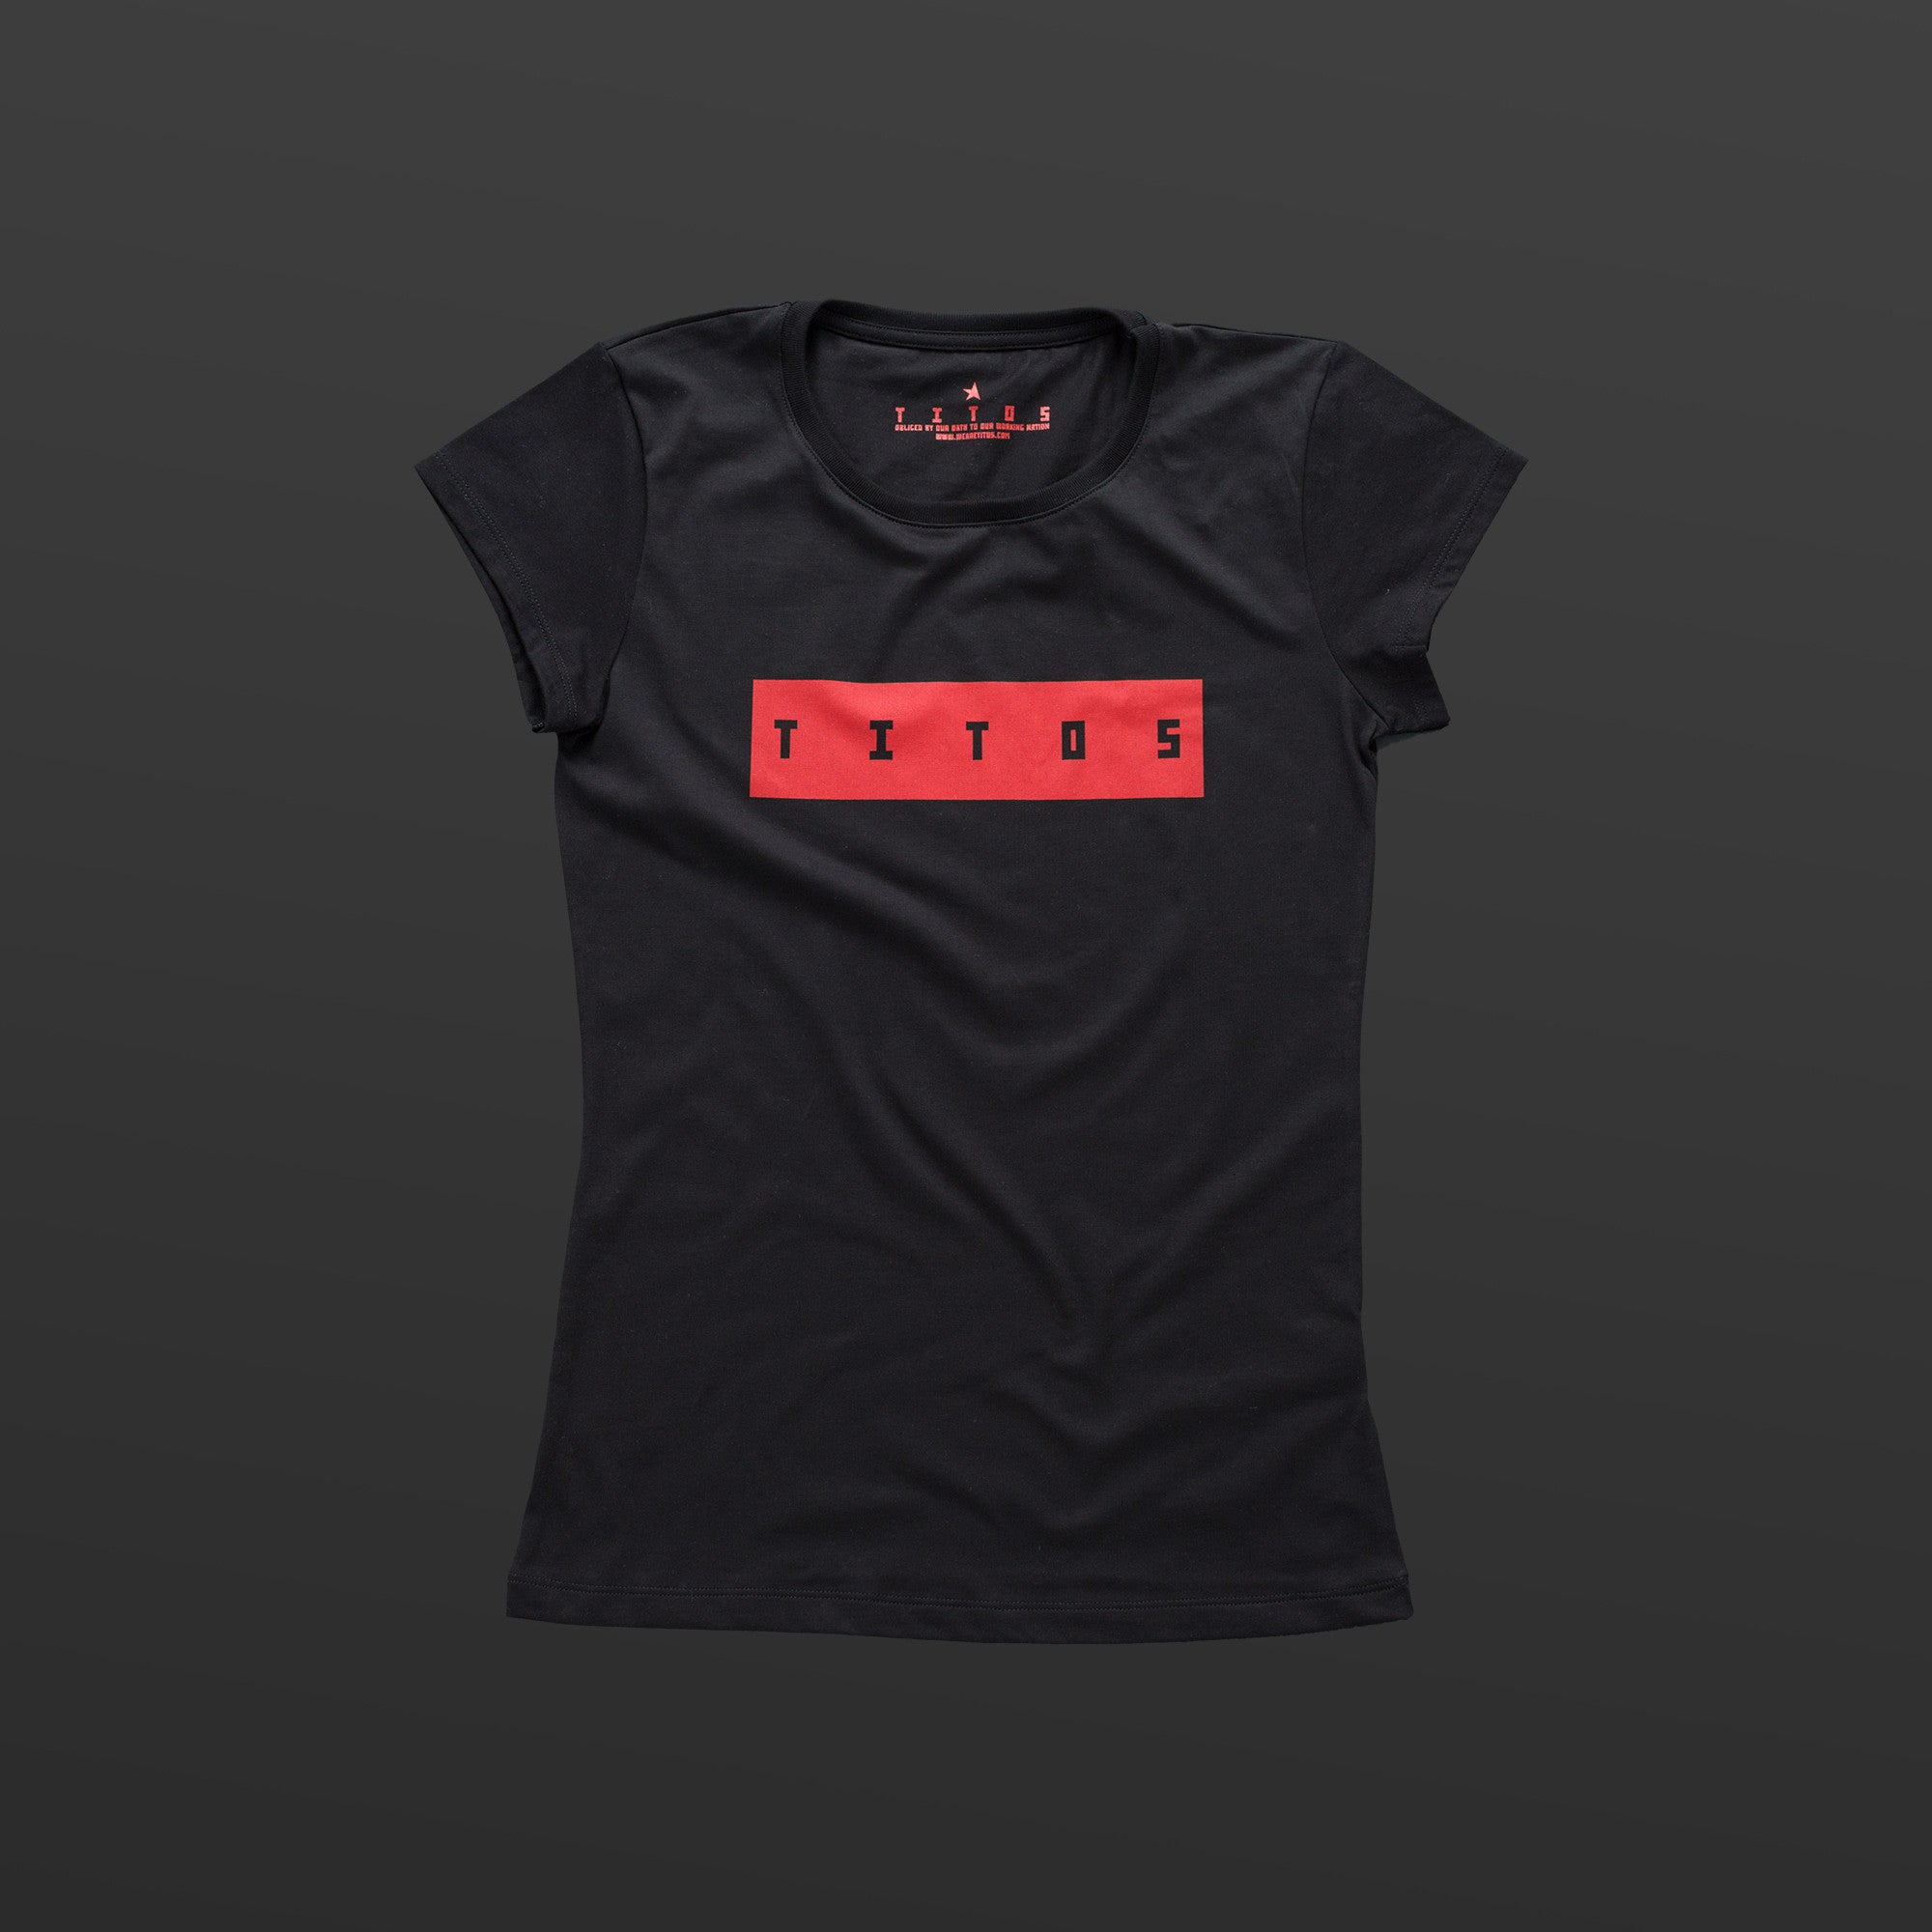 Third women's T-shirt black/red TITOS block logo